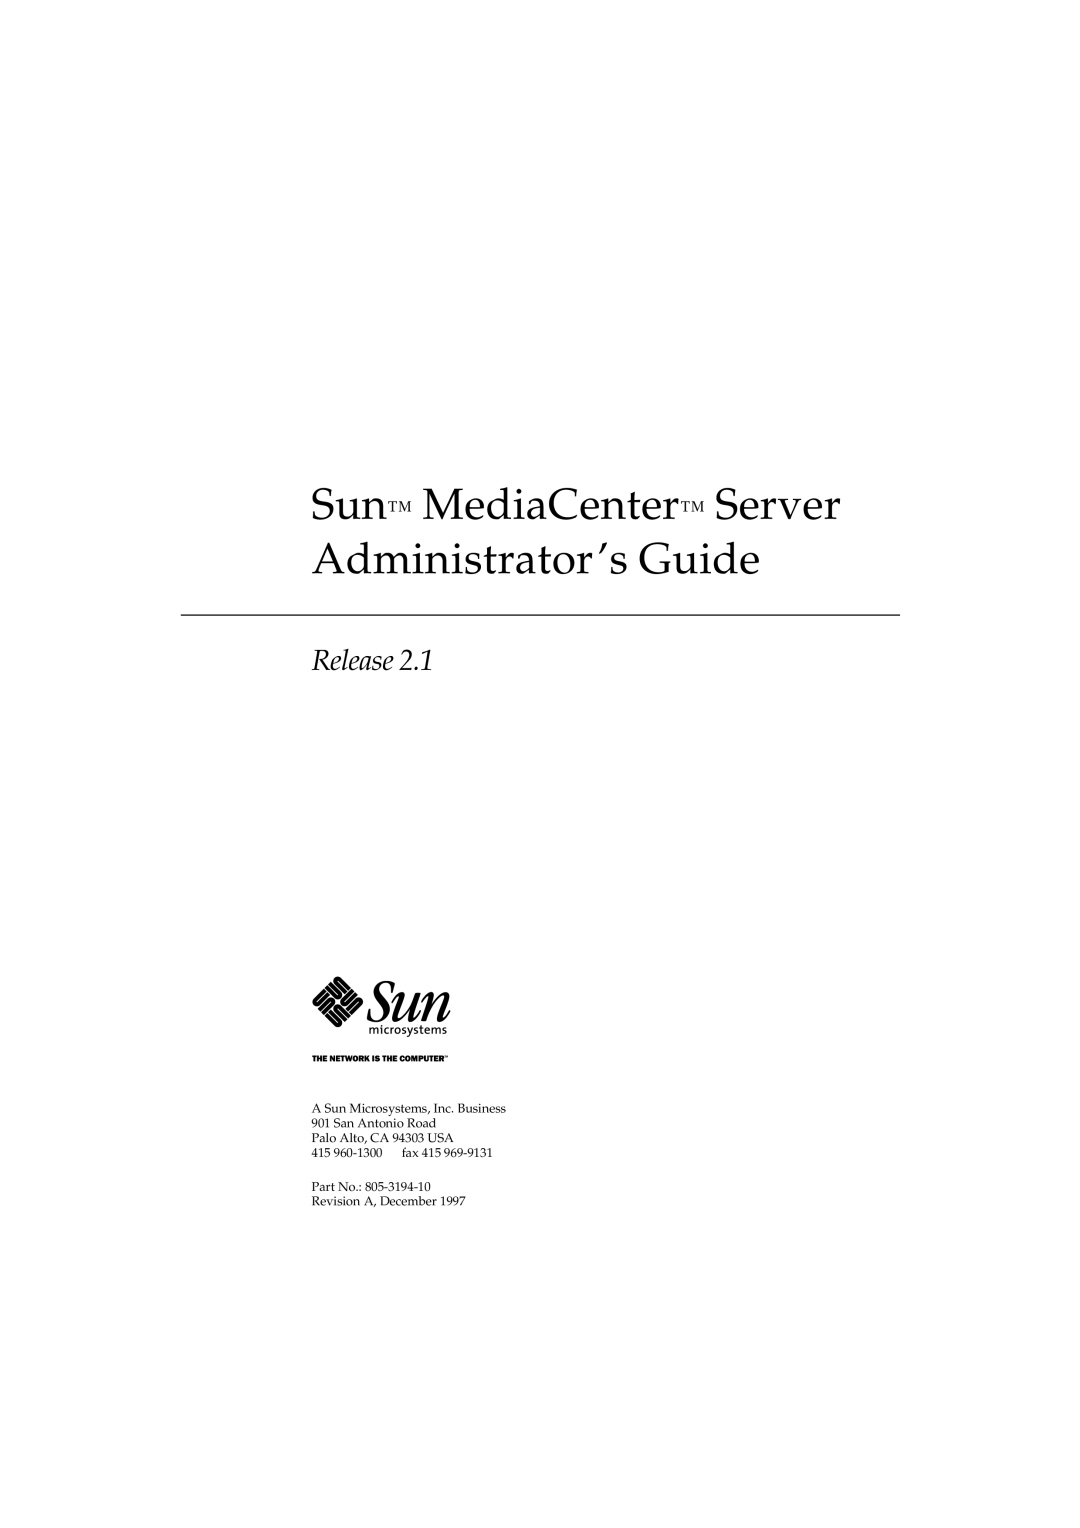 Sun Microsystems 2.1 manual Sun MediaCenter Server Administrator’s Guide, Release, Revision A, December 